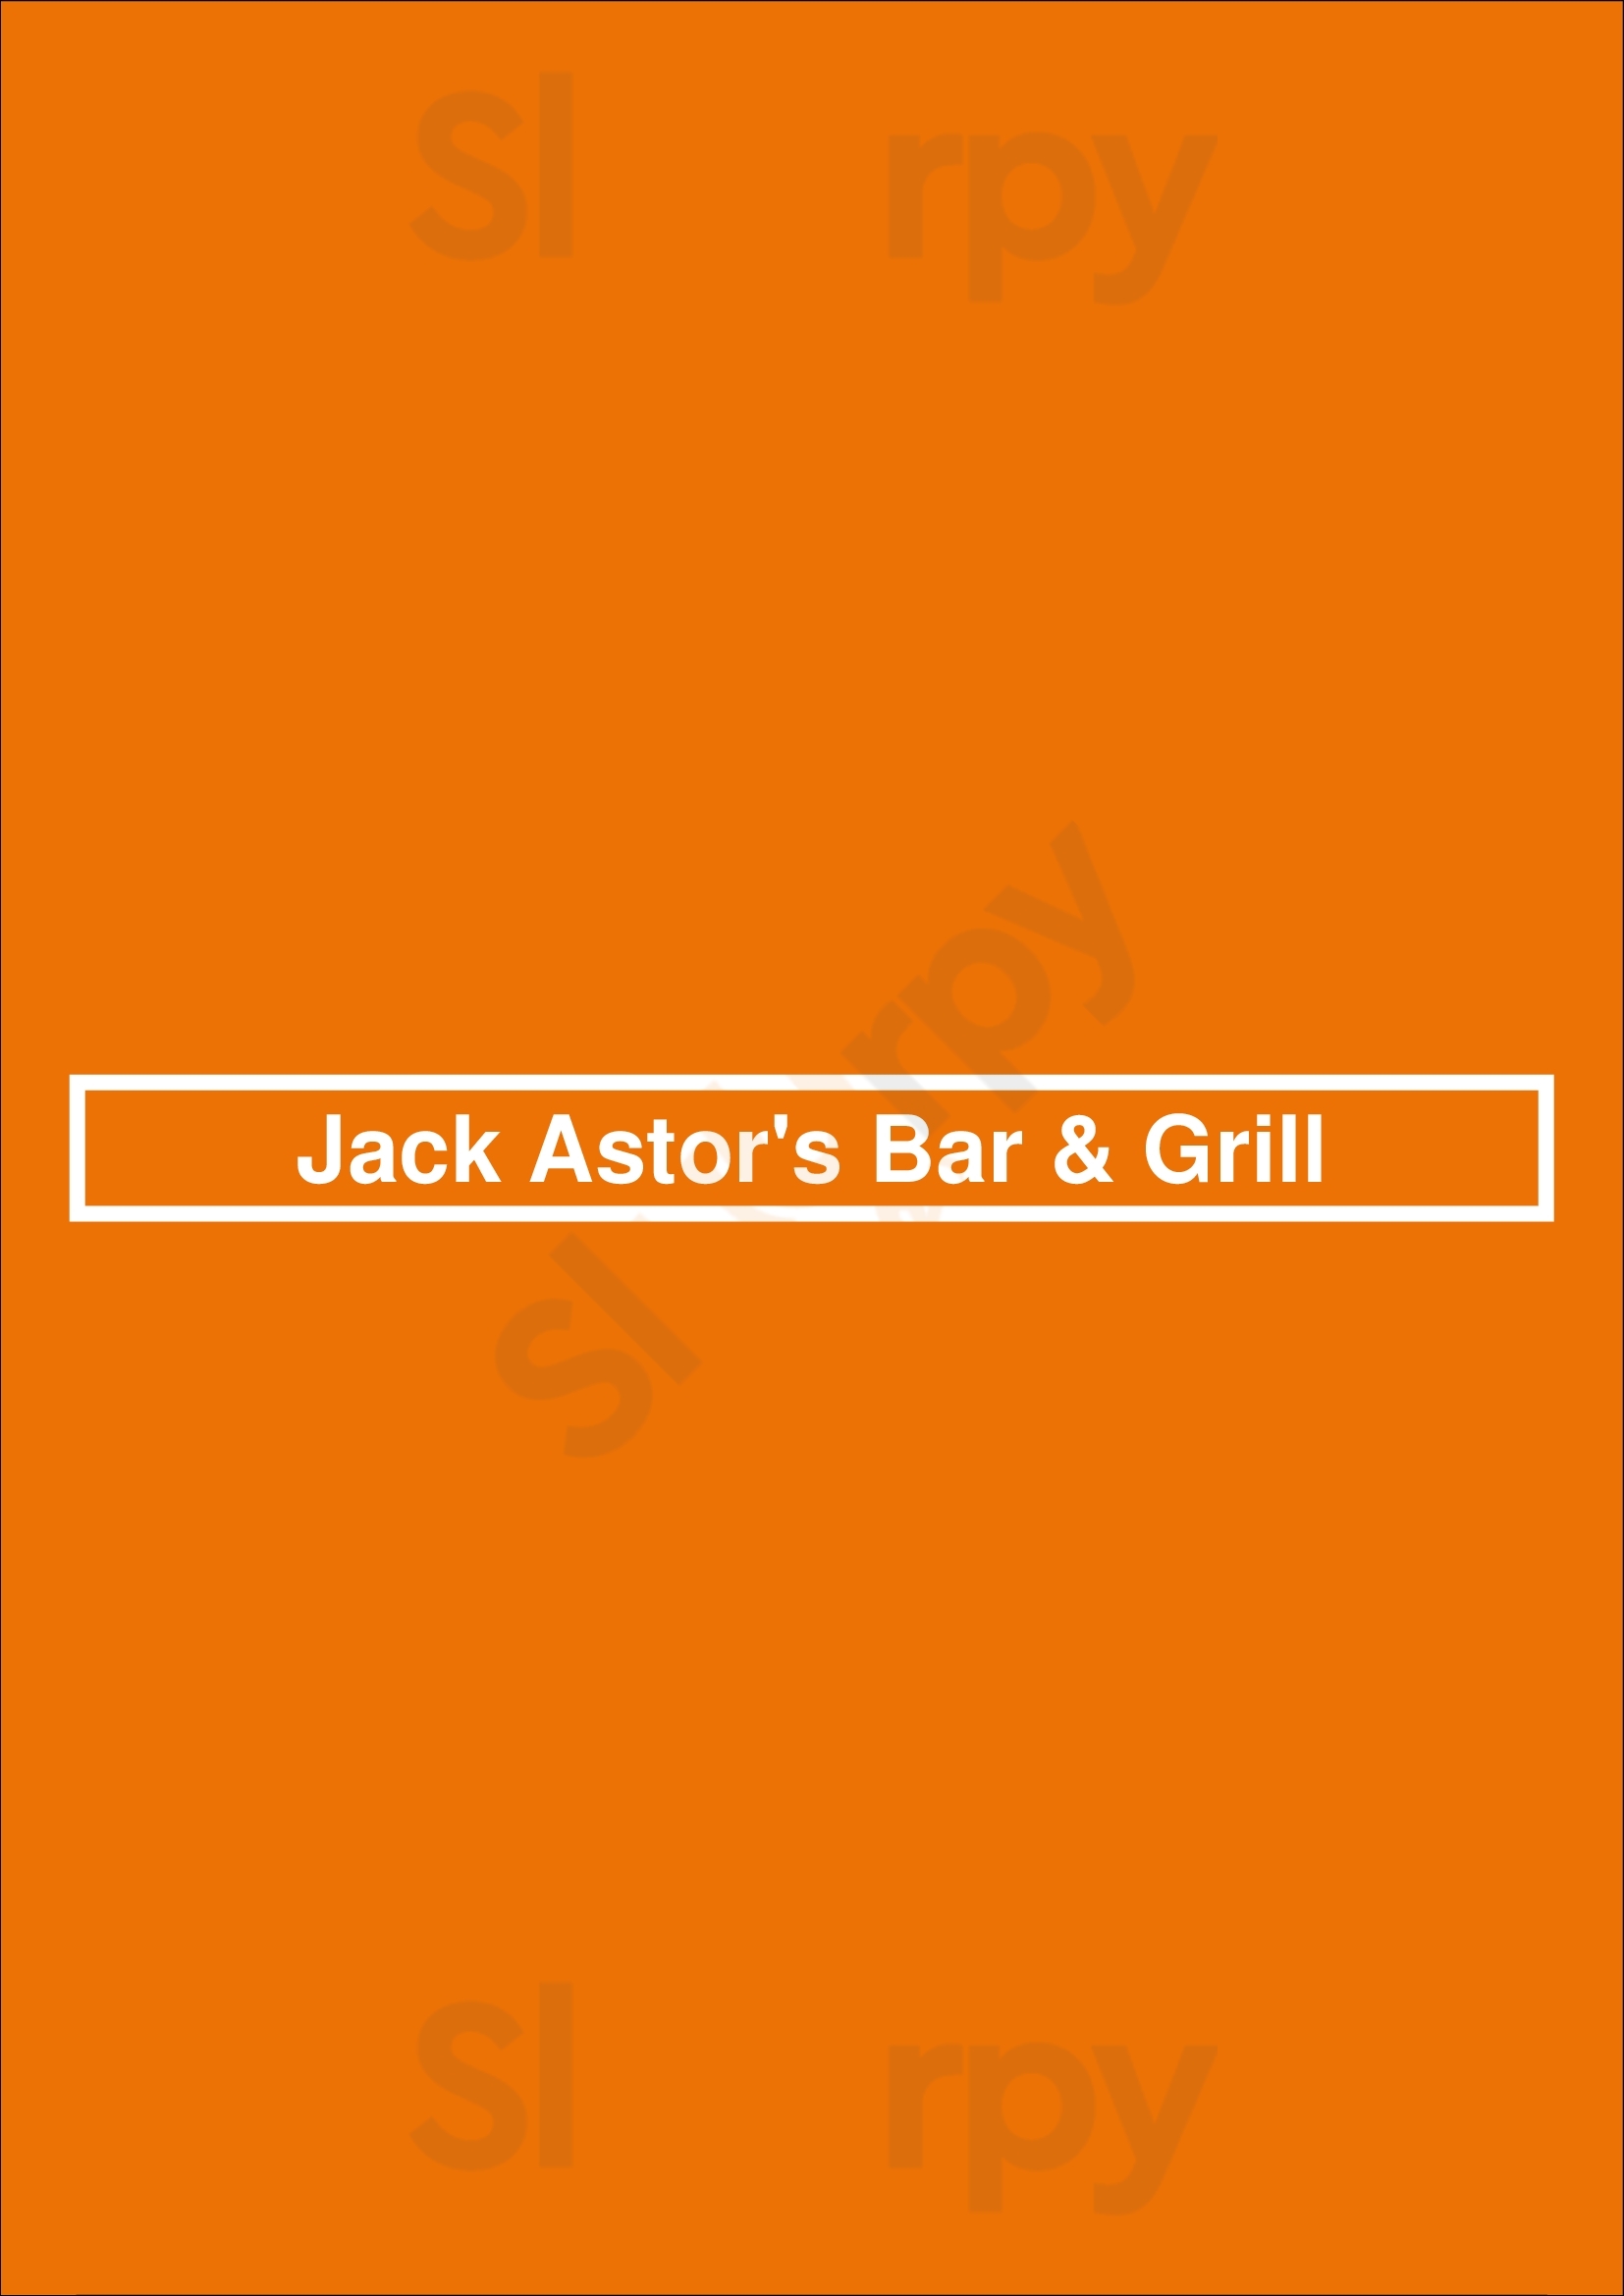 Jack Astor's Bar & Grill Stoney Creek Menu - 1